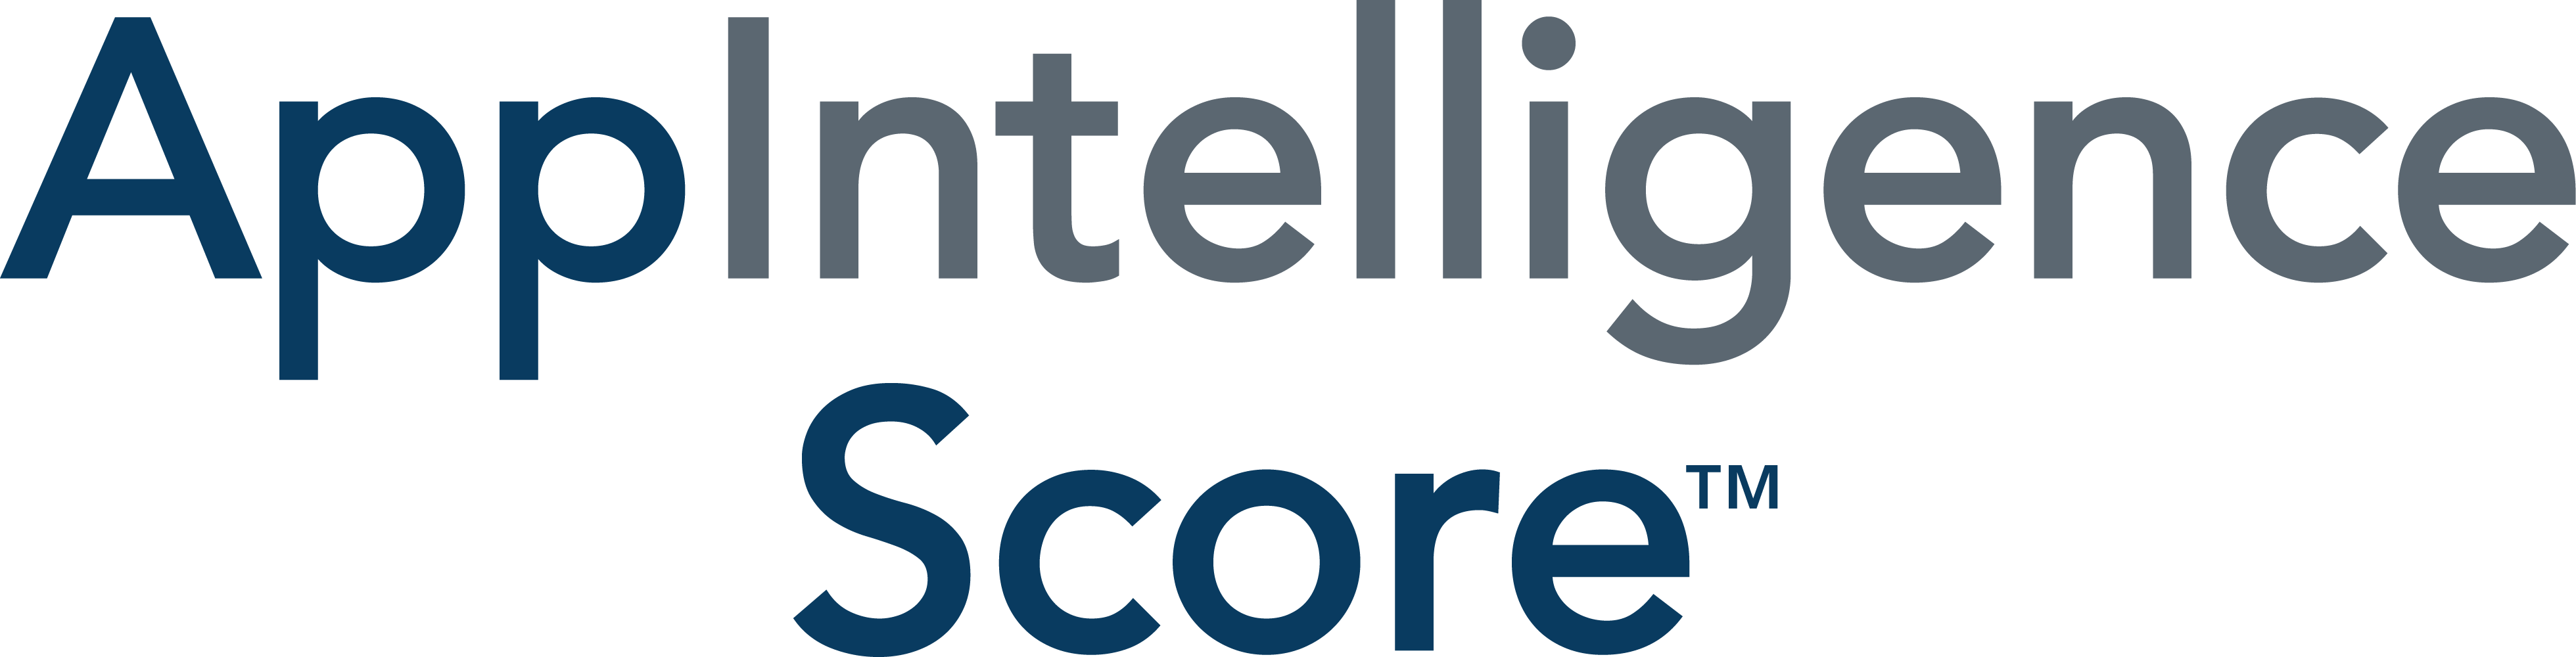 AppIntelScore-logo-stk-clr